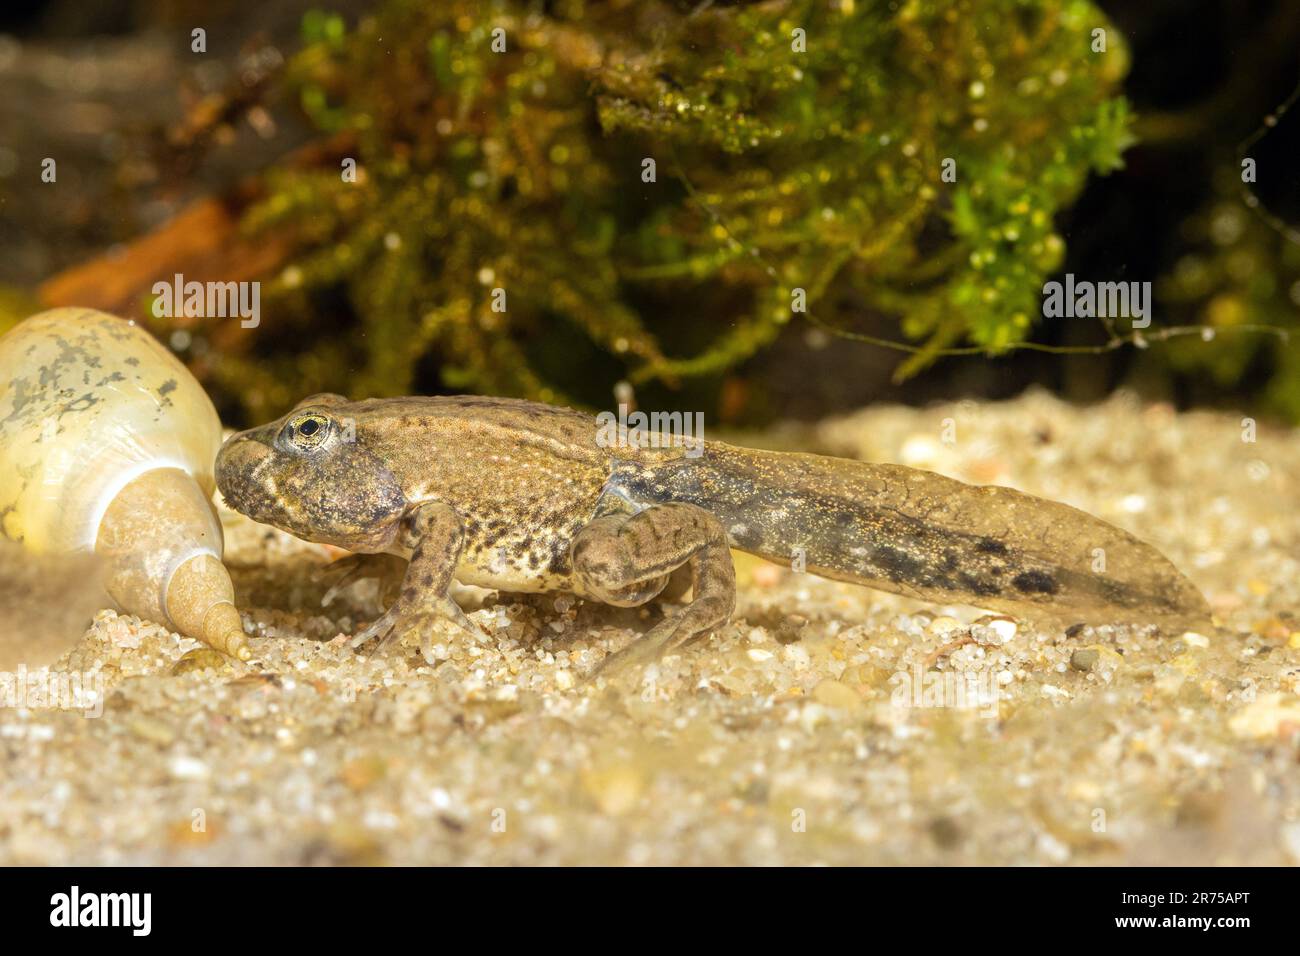 marsh frog, lake frog (Rana ridibunda, Pelophylax ridibundus), tadpole nearing completion of metamorphosis, side view, Germany Stock Photo